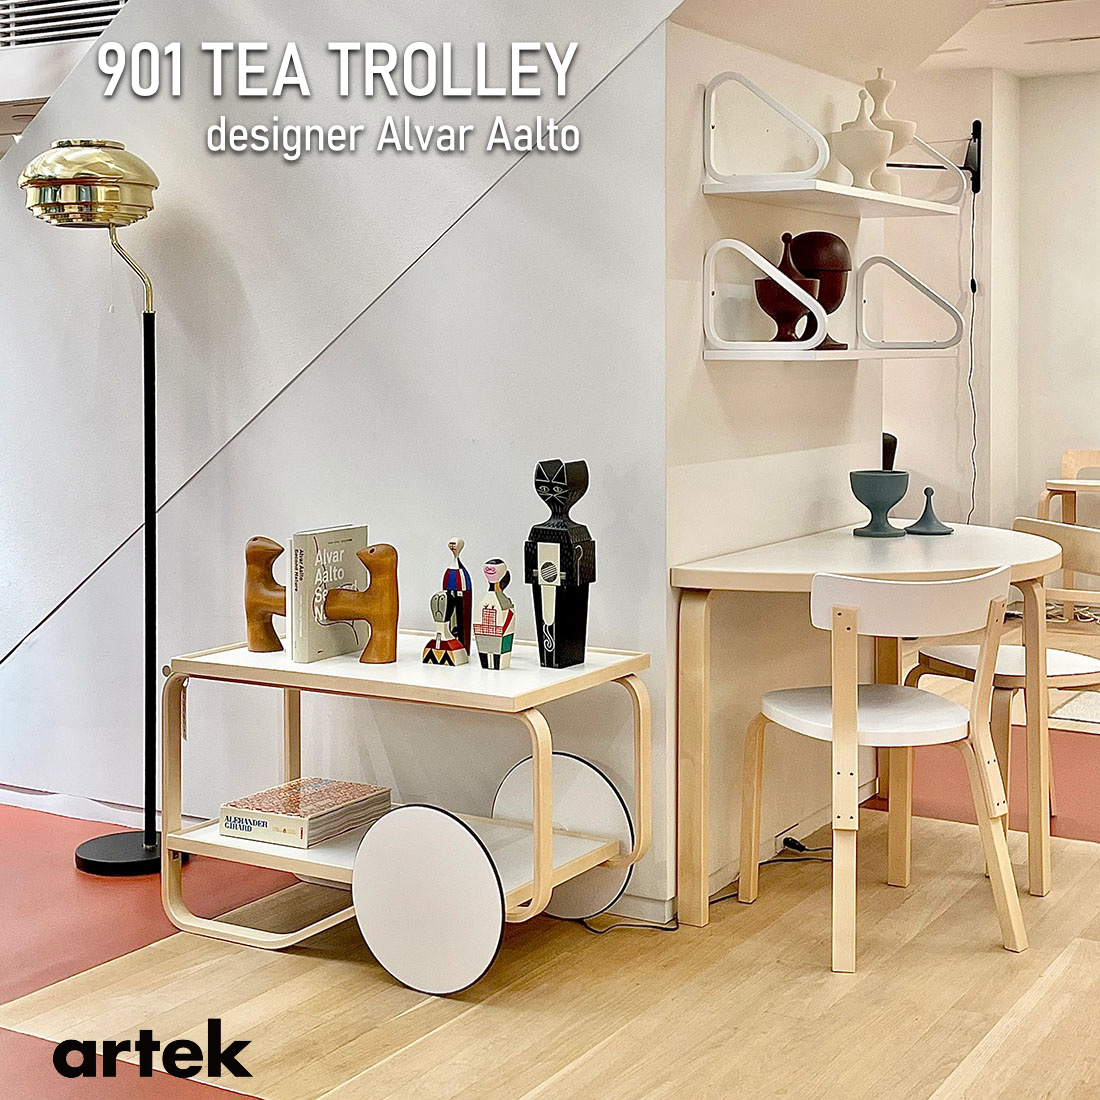  artek アルテック ティートロリー tea trolley 901 teatrolley ブラック ホワイト テーブル 車輪 車輪付き 北欧 インテリア